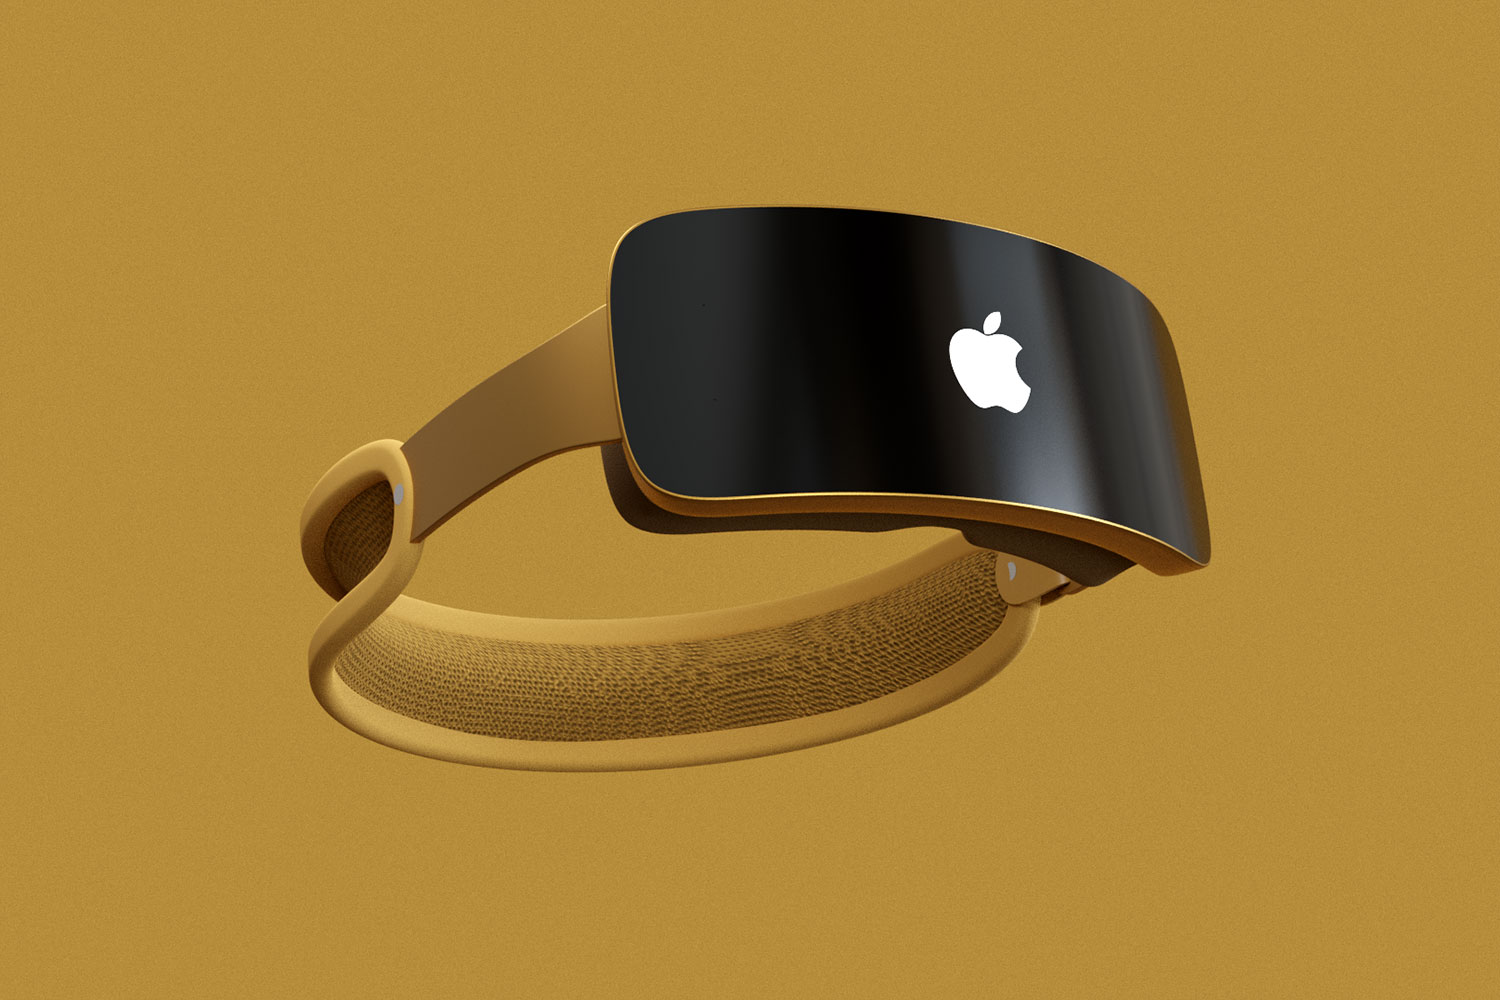 Apple VR Headset. Apple ar/VR Headset. Новая VR гарнитура Apple. Apple VR 2023. Apple vr pro